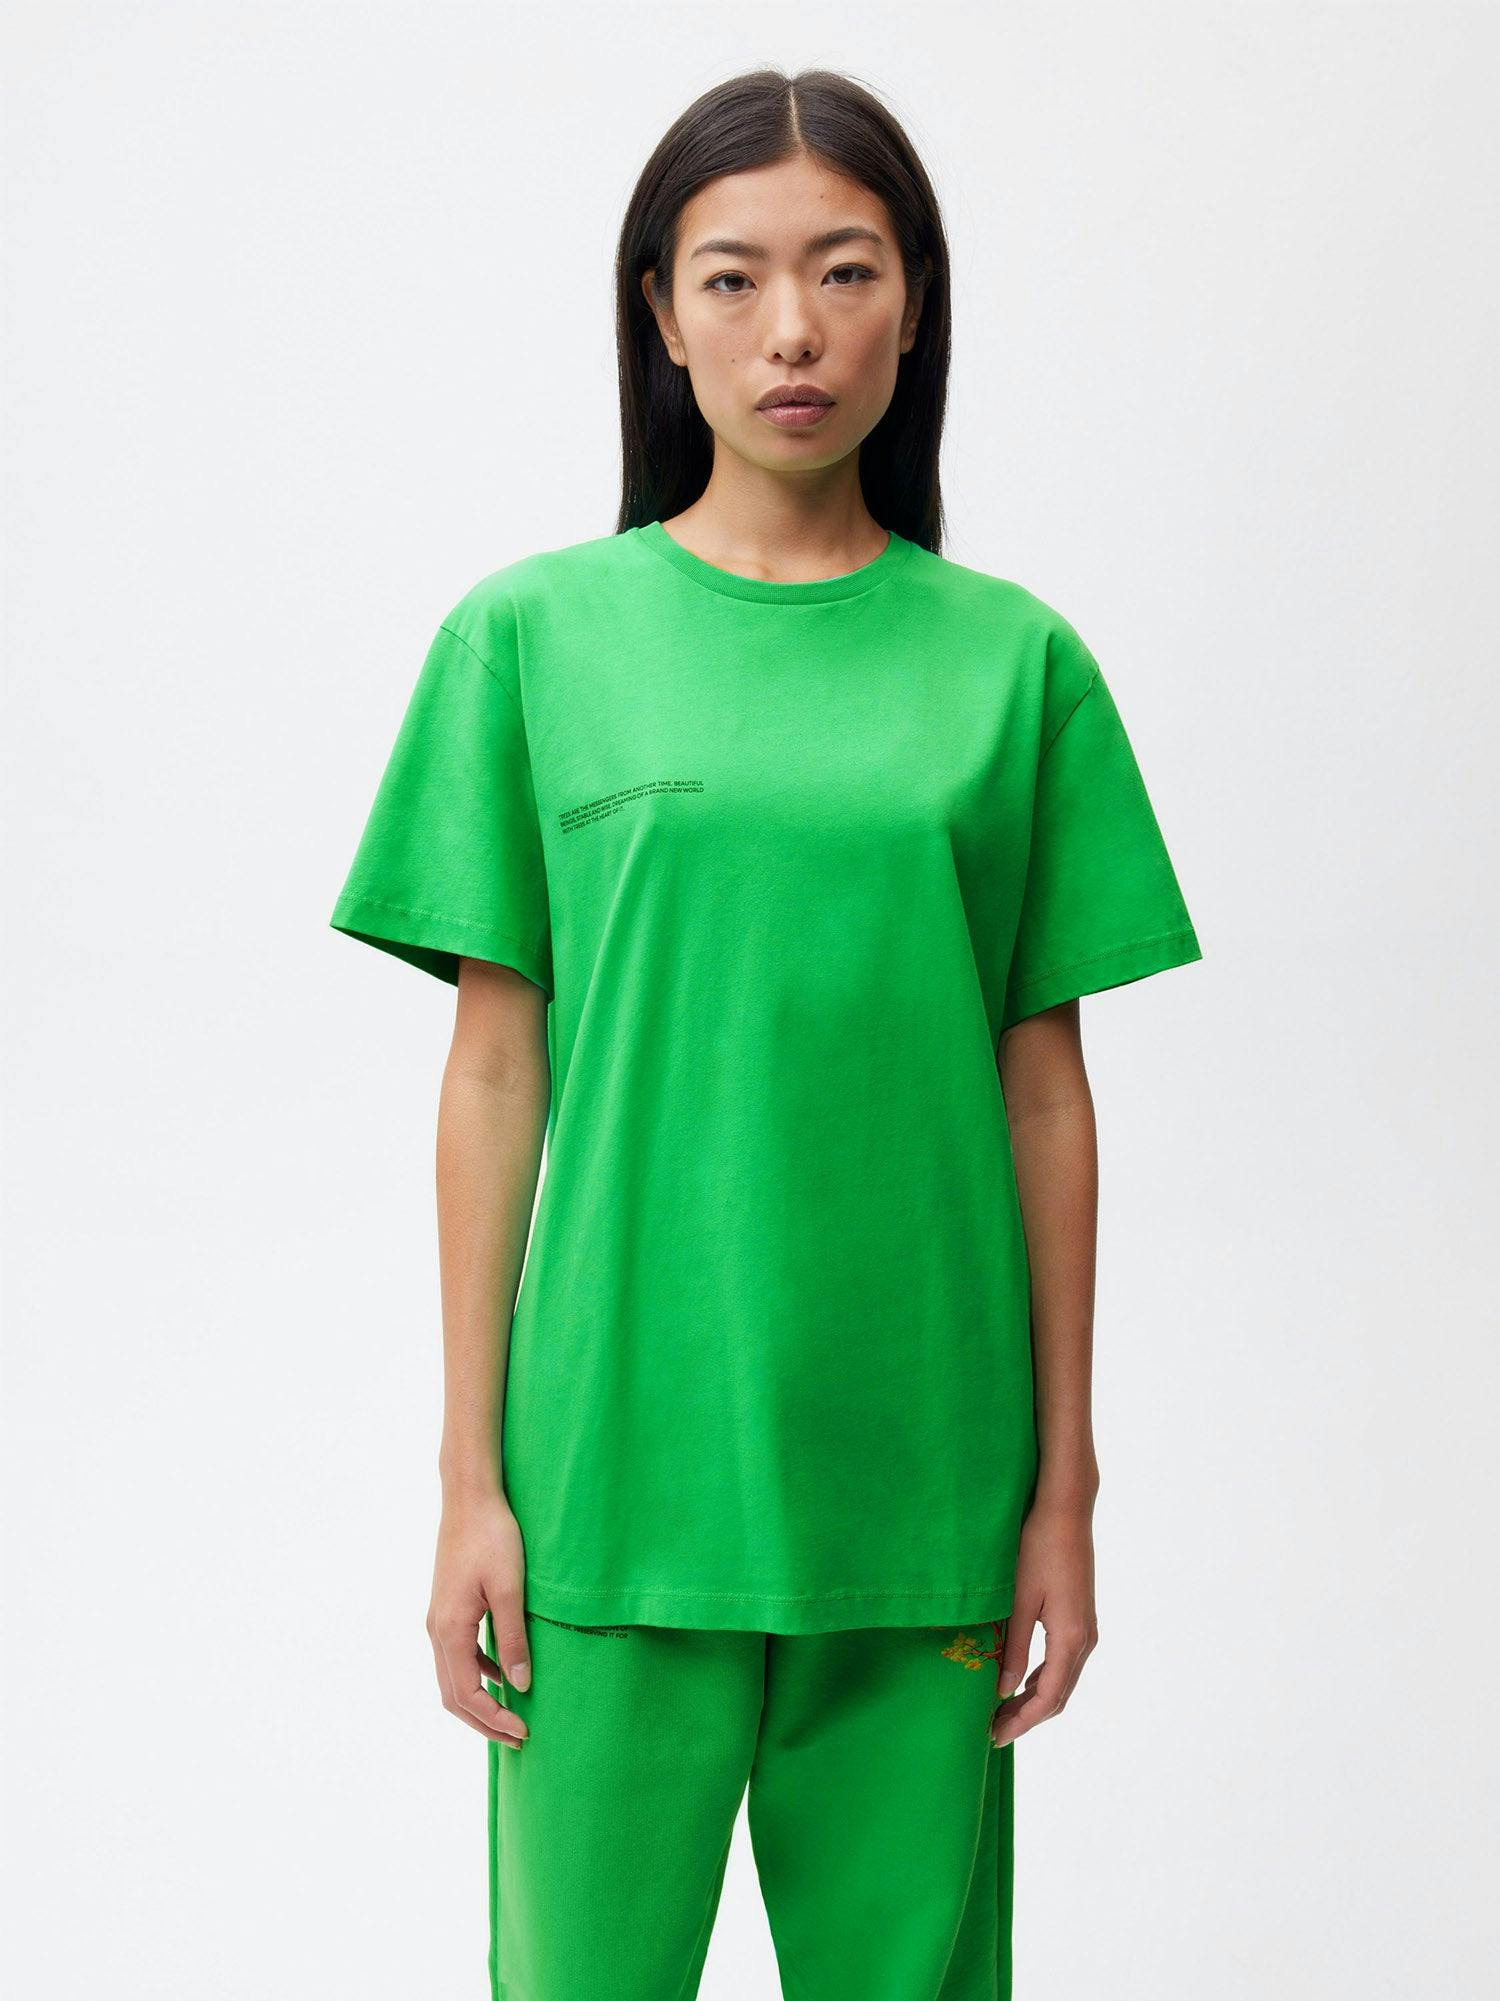 https://cdn.shopify.com/s/files/1/0035/1309/0115/products/Pangaia-Kenny-Scharf-Organic-Cotton-T-Shirt-Paradis-Perdu-Jade-Green-Female-1.jpg?v=1662734802